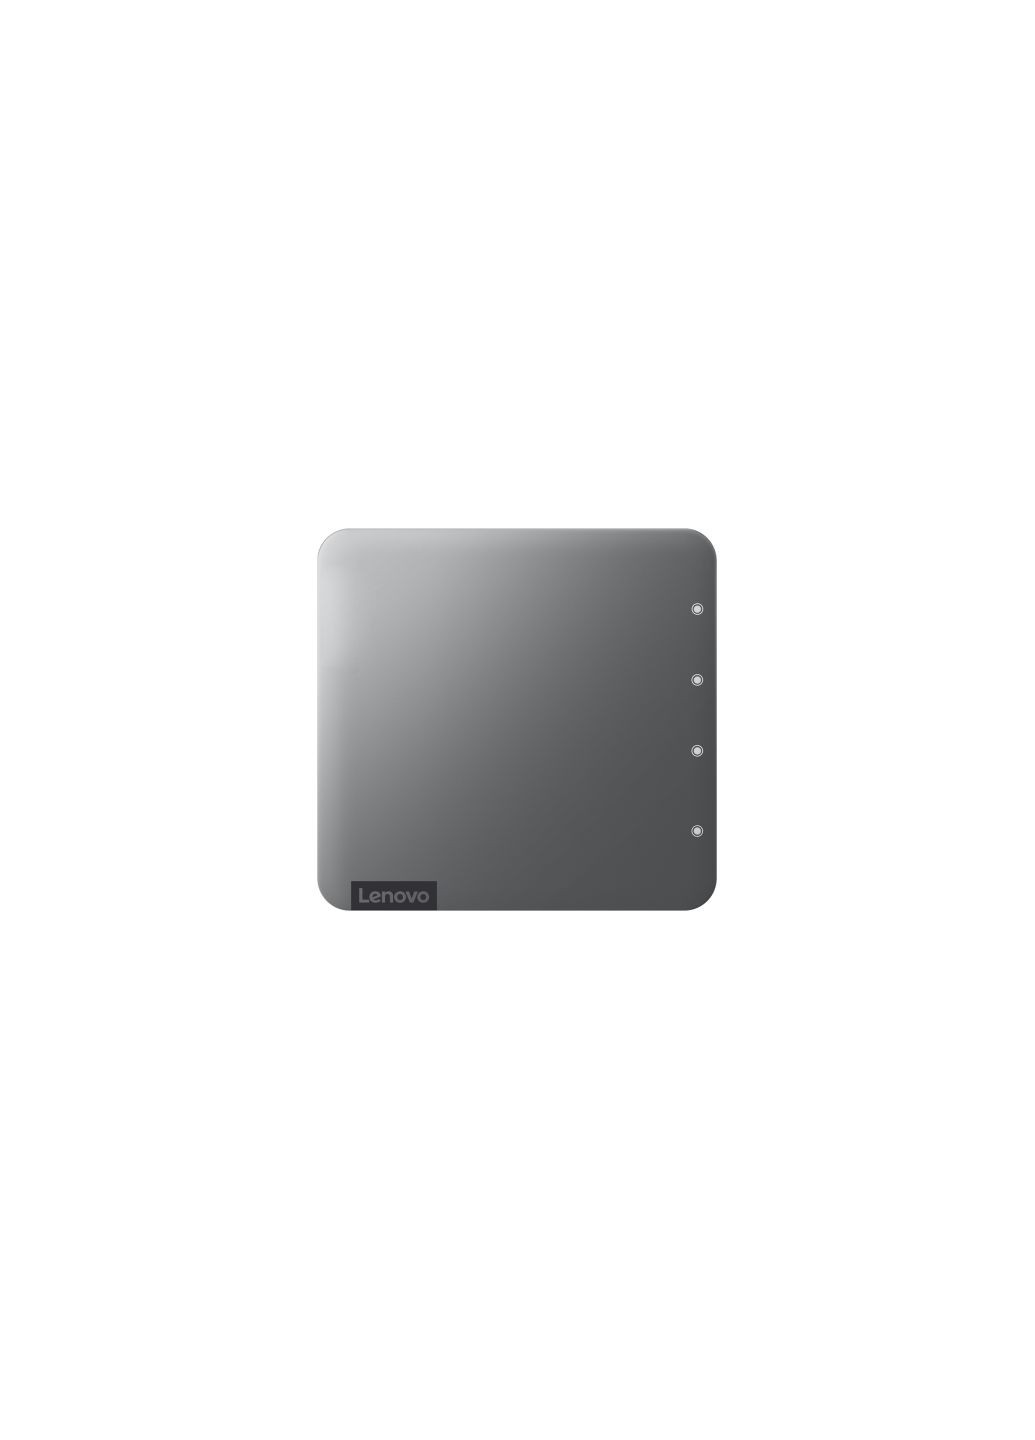 Блок питания для планшета Go 130W MultiPort Charger (G0A6130WEU) Lenovo go 130w multi-port charger (275100388)